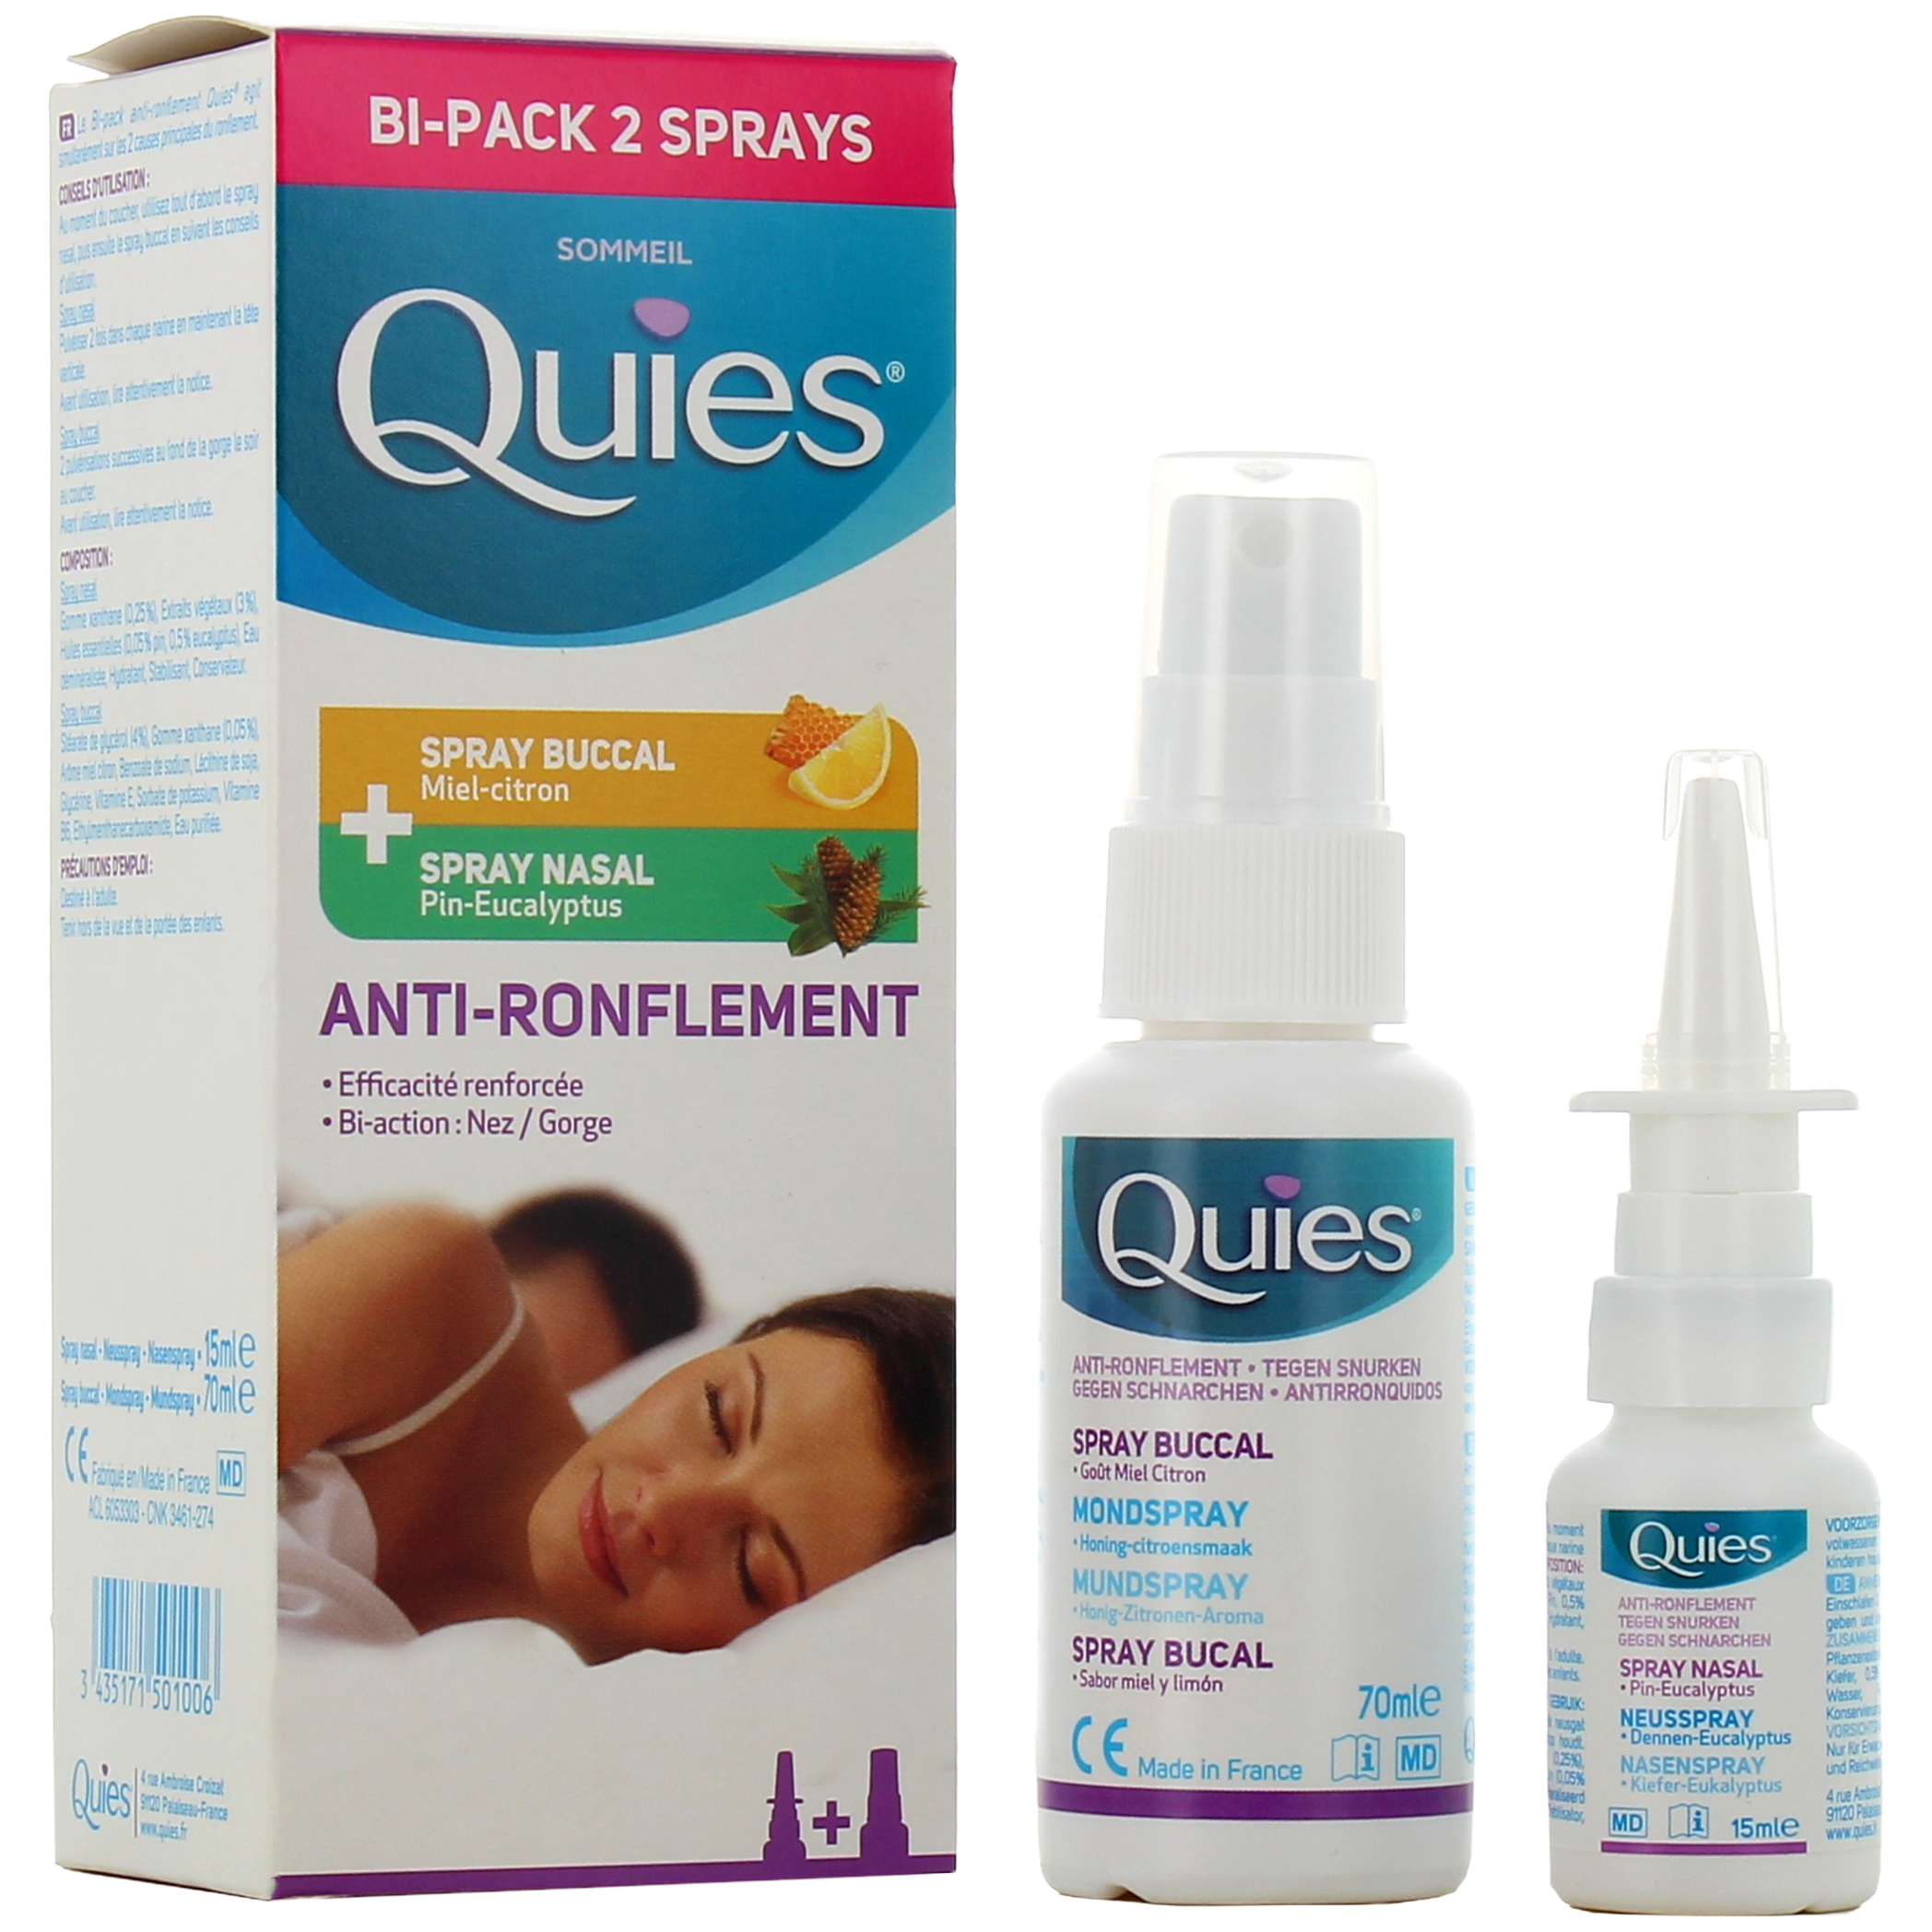 Bi-pack de 2 sprays anti-ronflement de Quies - 2 sprays